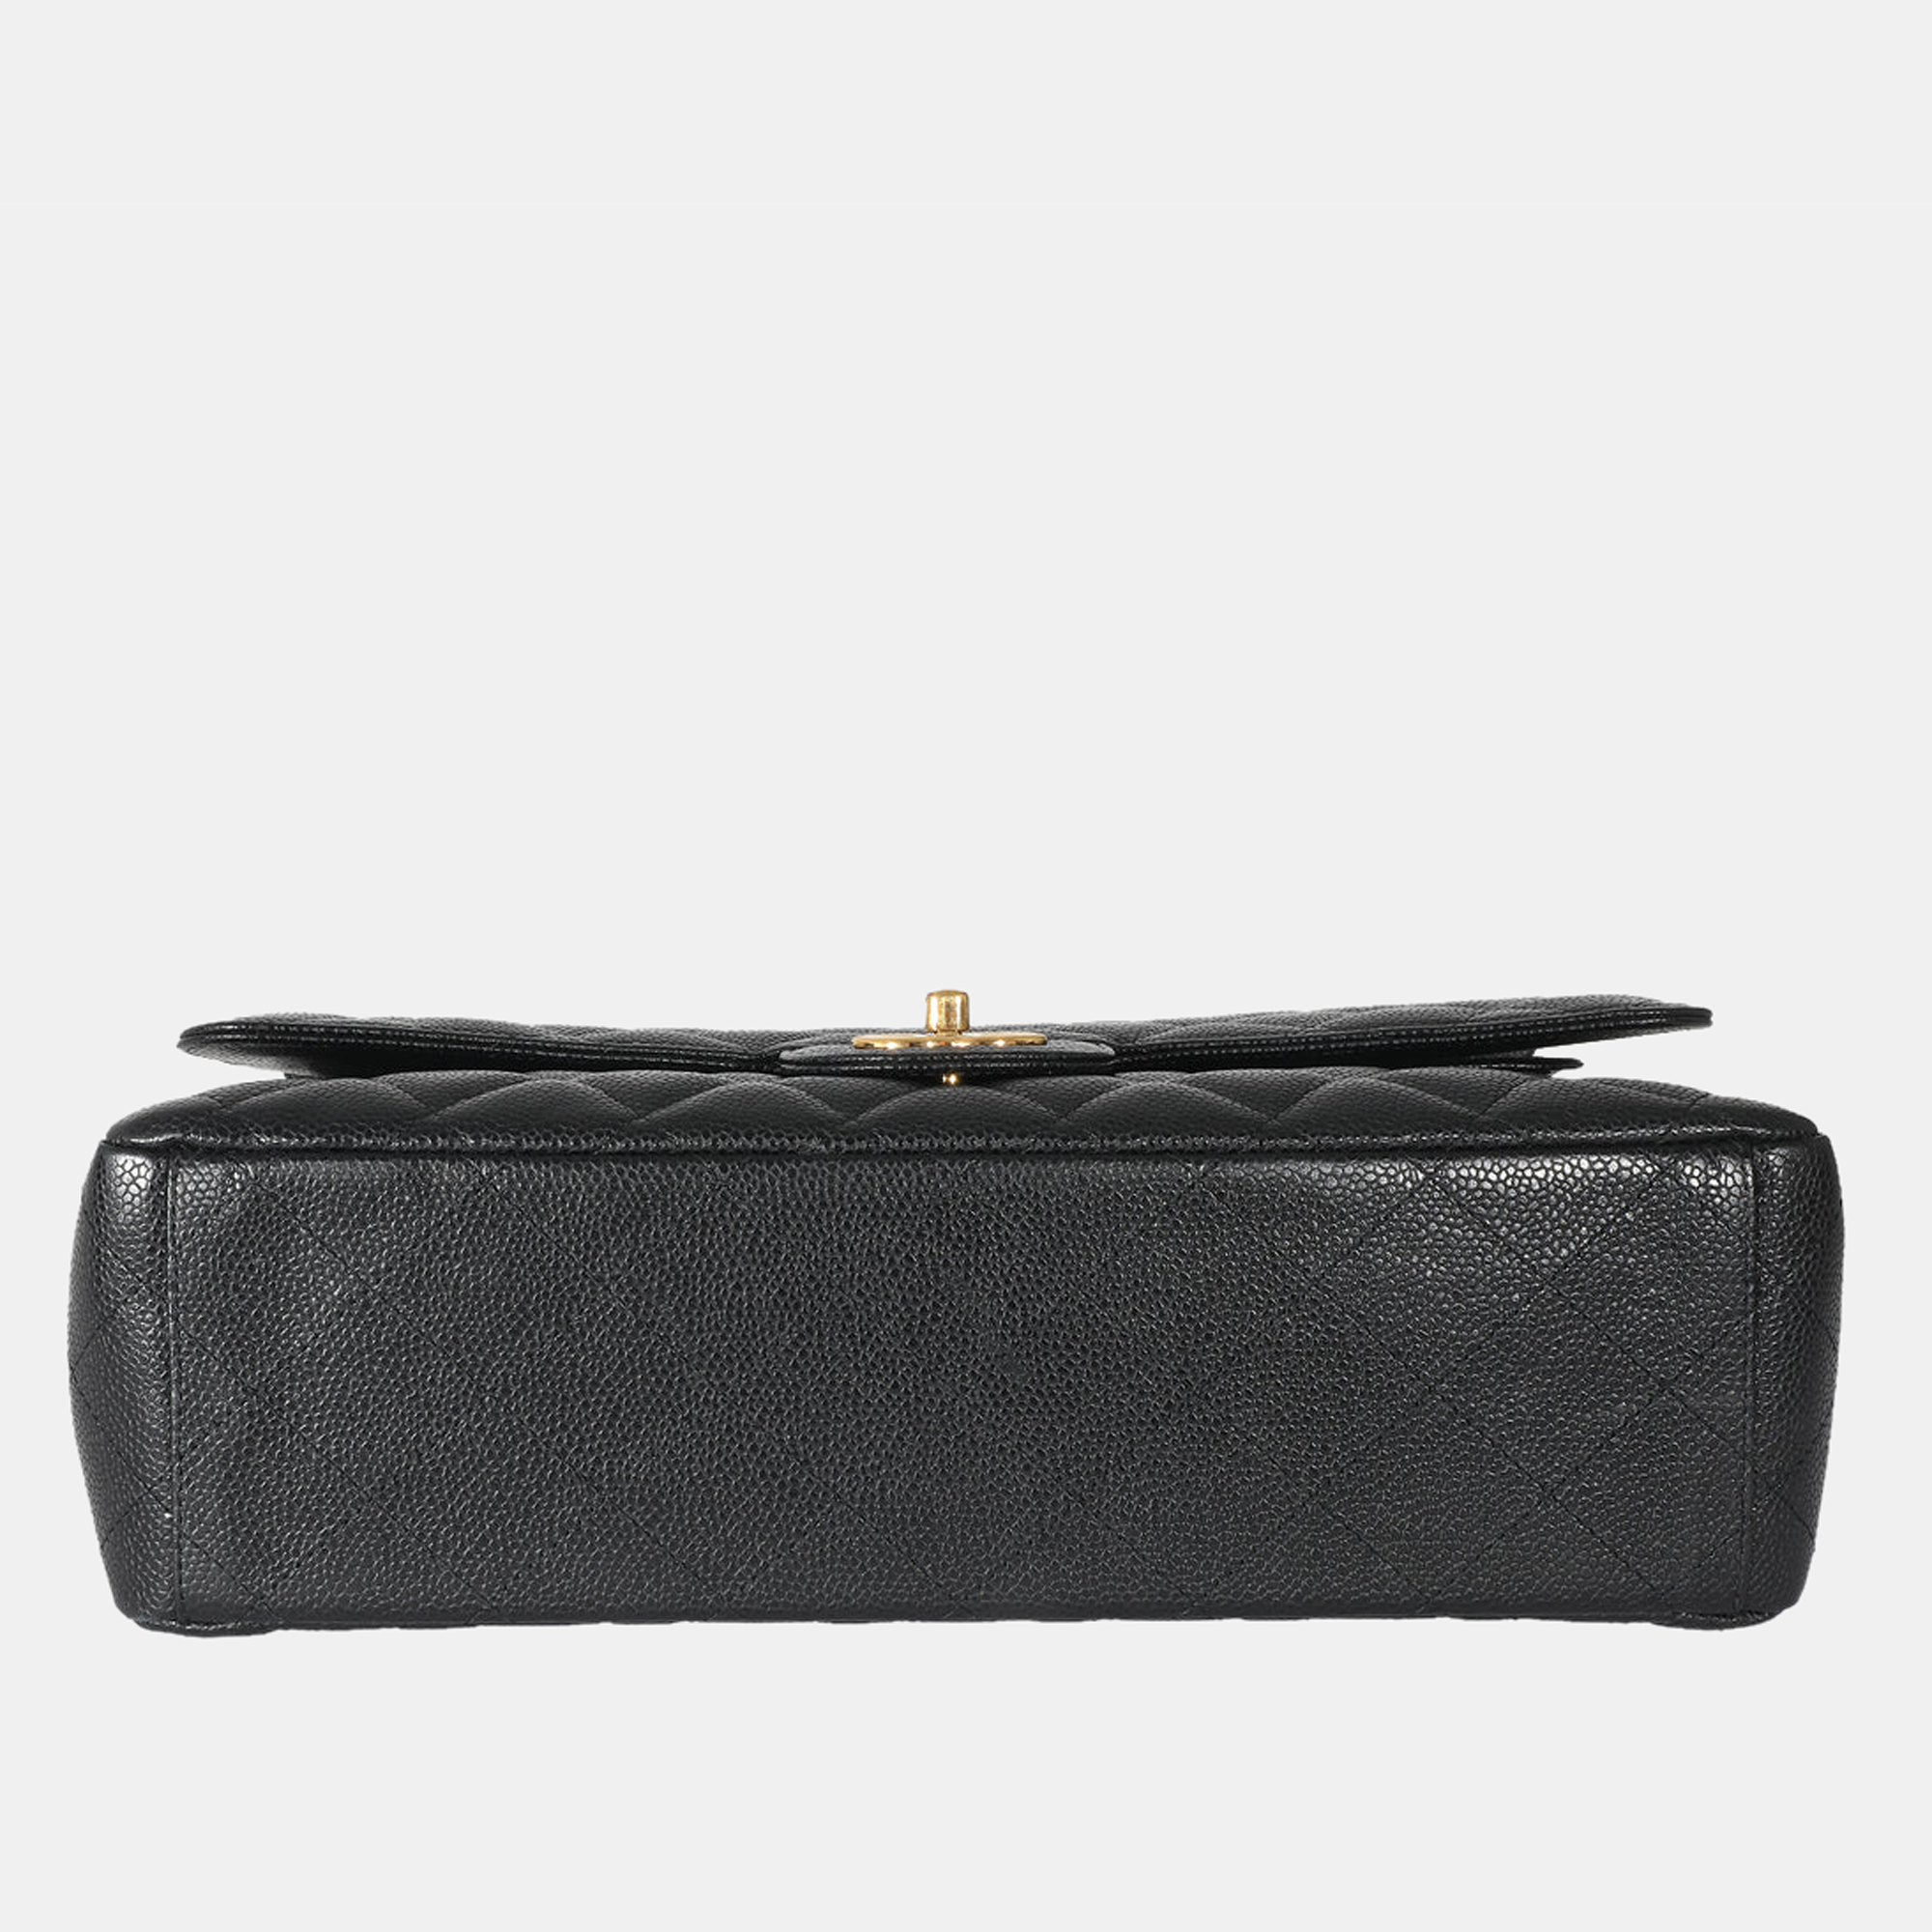 Chanel Black Caviar Leather Maxi Double Flap Bag